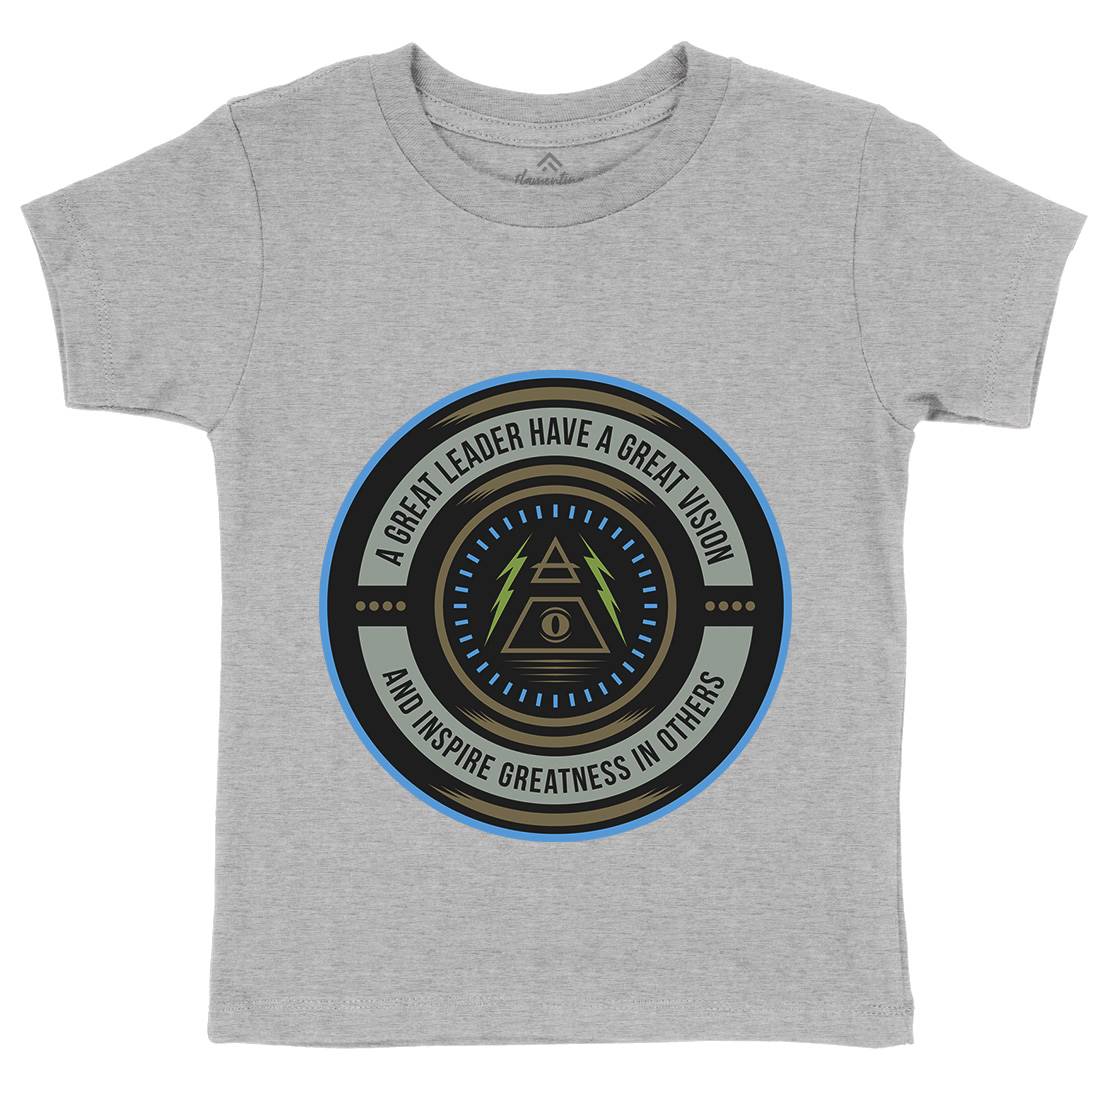 Great Vision Kids Crew Neck T-Shirt Illuminati A323